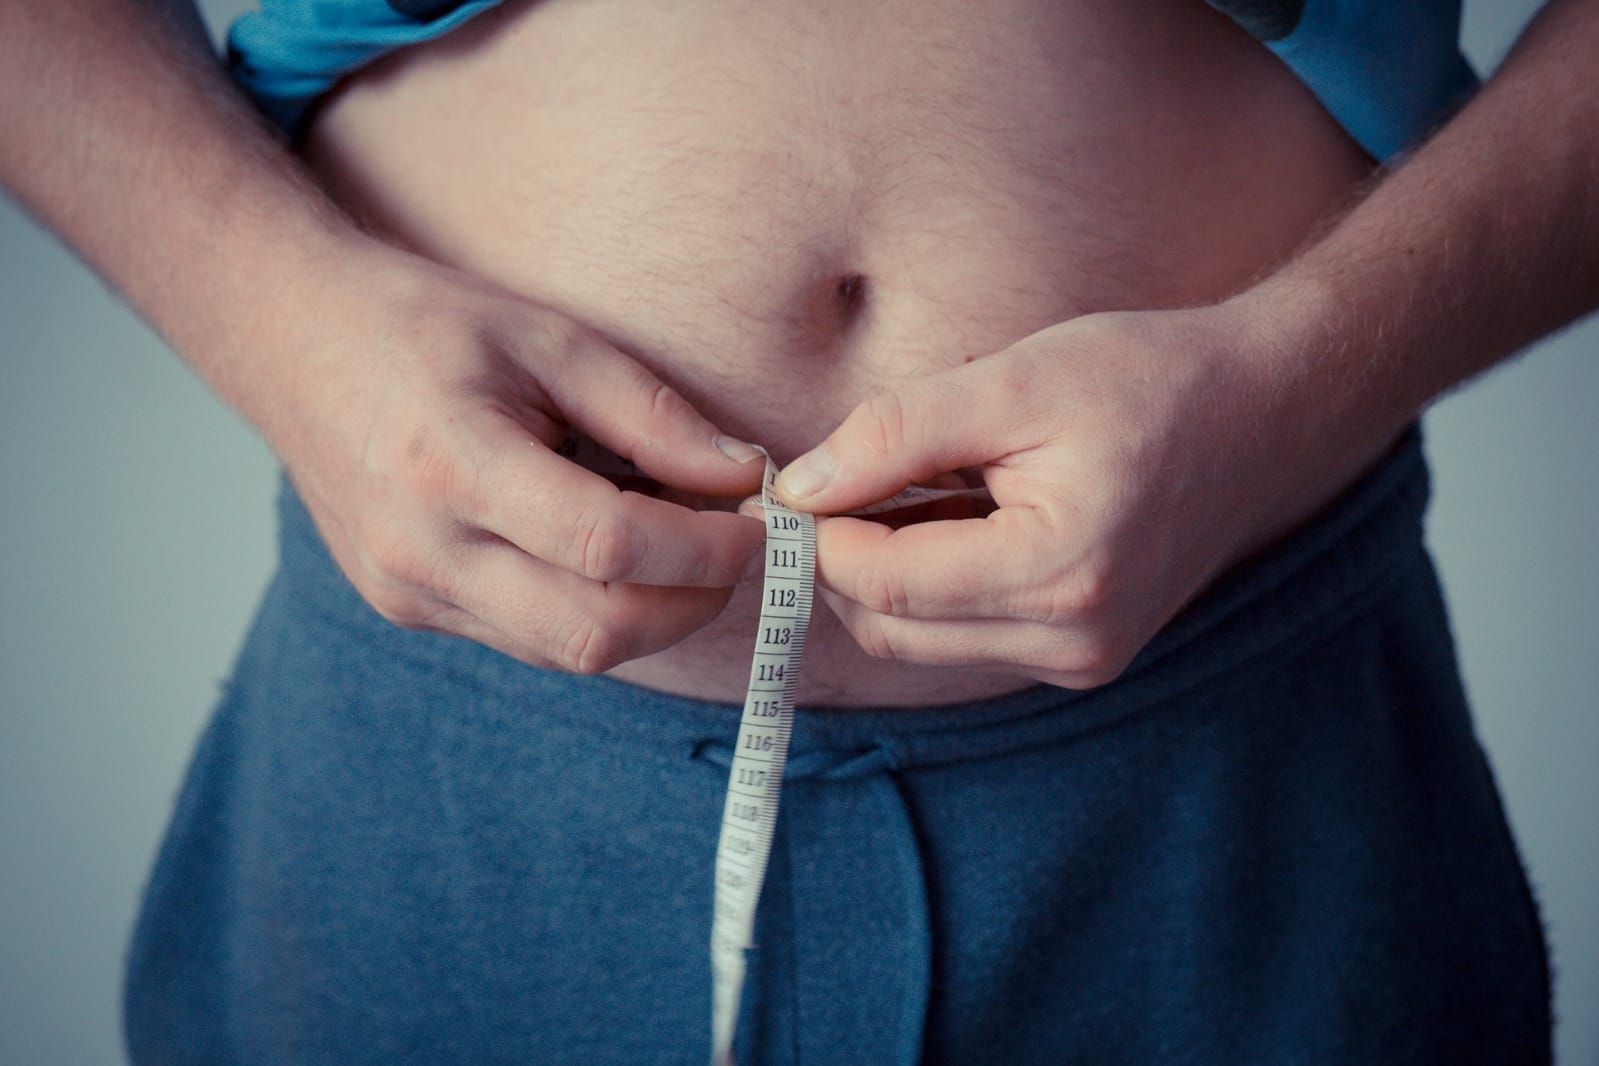 Ilustrasi seseorang mengukur lingkar perut sebagai tanda kelebihan berat badan atau obesitas.